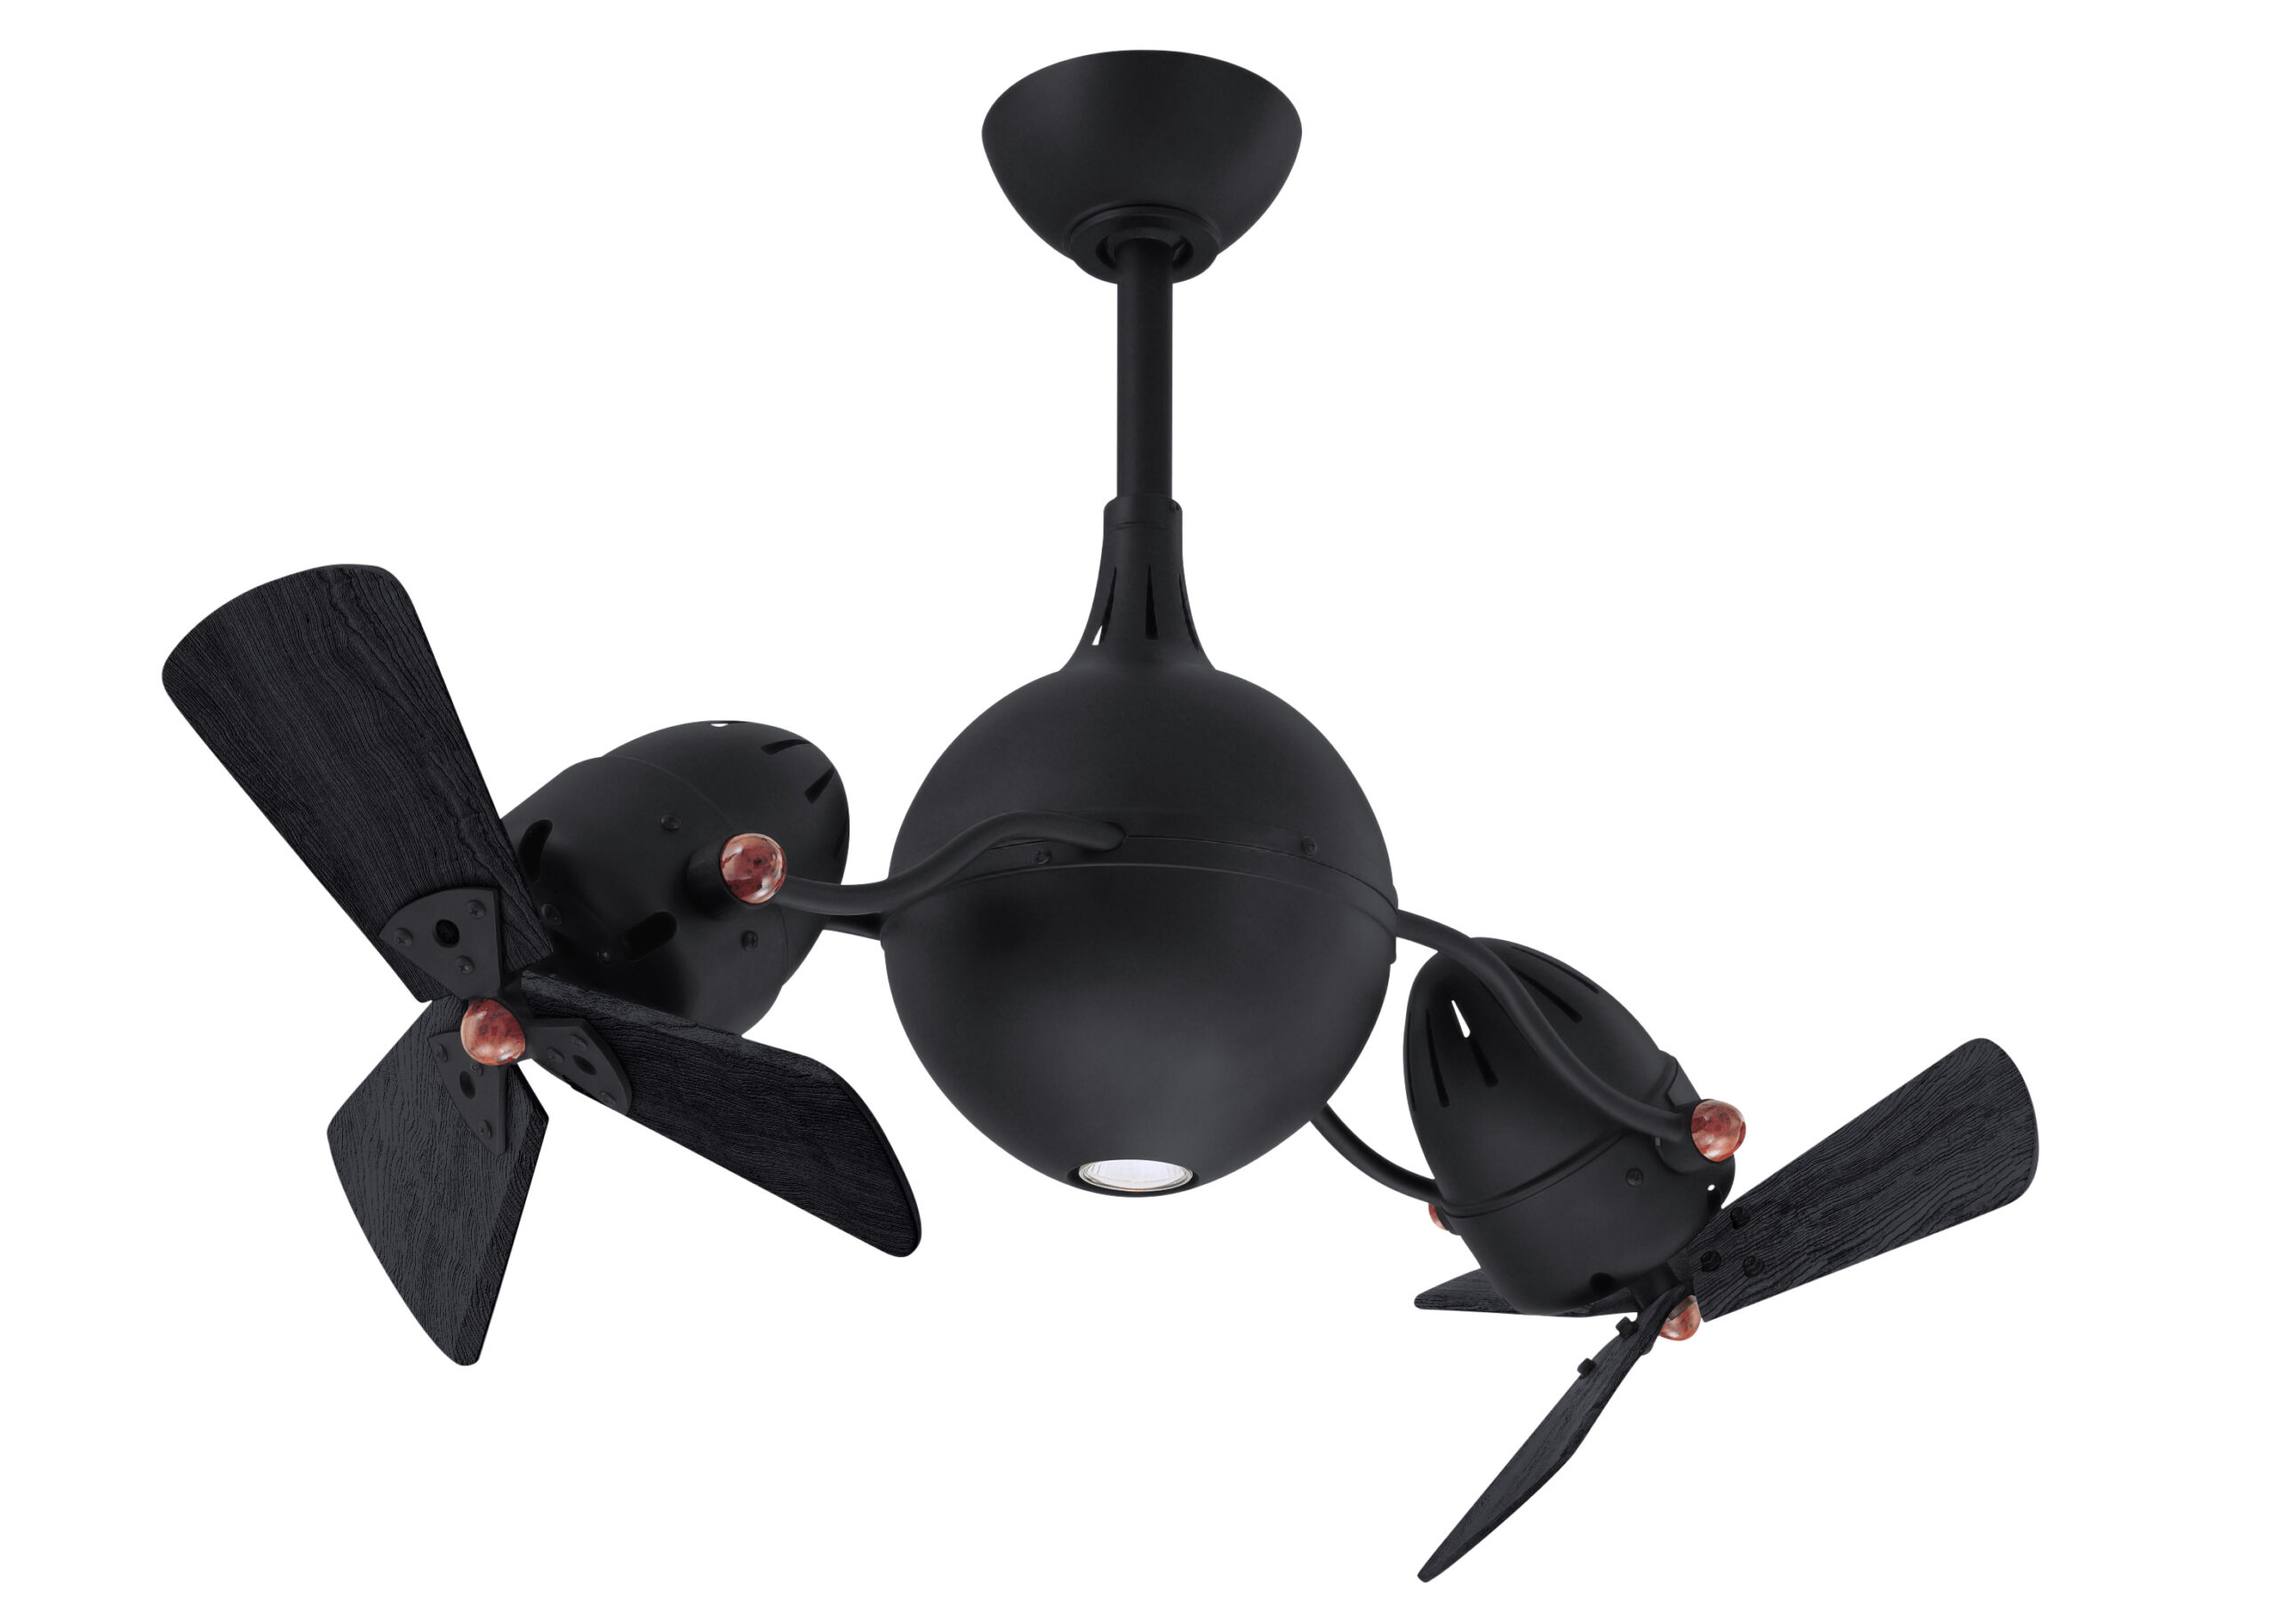 Acqua ceiling fan in matte black with matte black blades